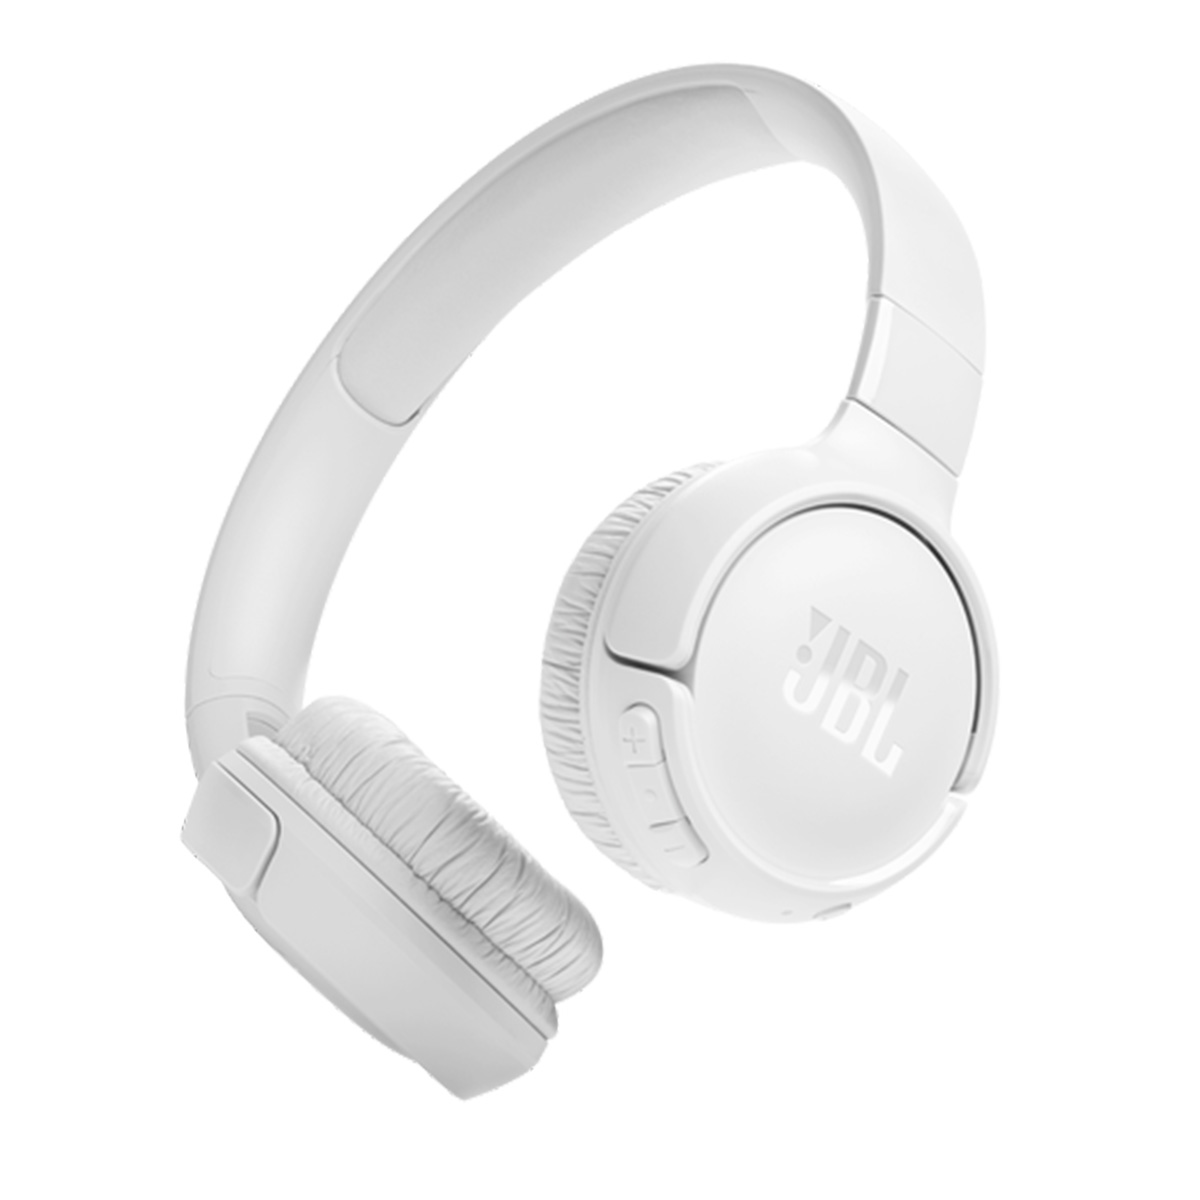 Fone de Ouvido Bluetooth JBL Tune T520 BT - Dobrável - Pure Bass - com Microfone - Branco - JBLT520BTWHT